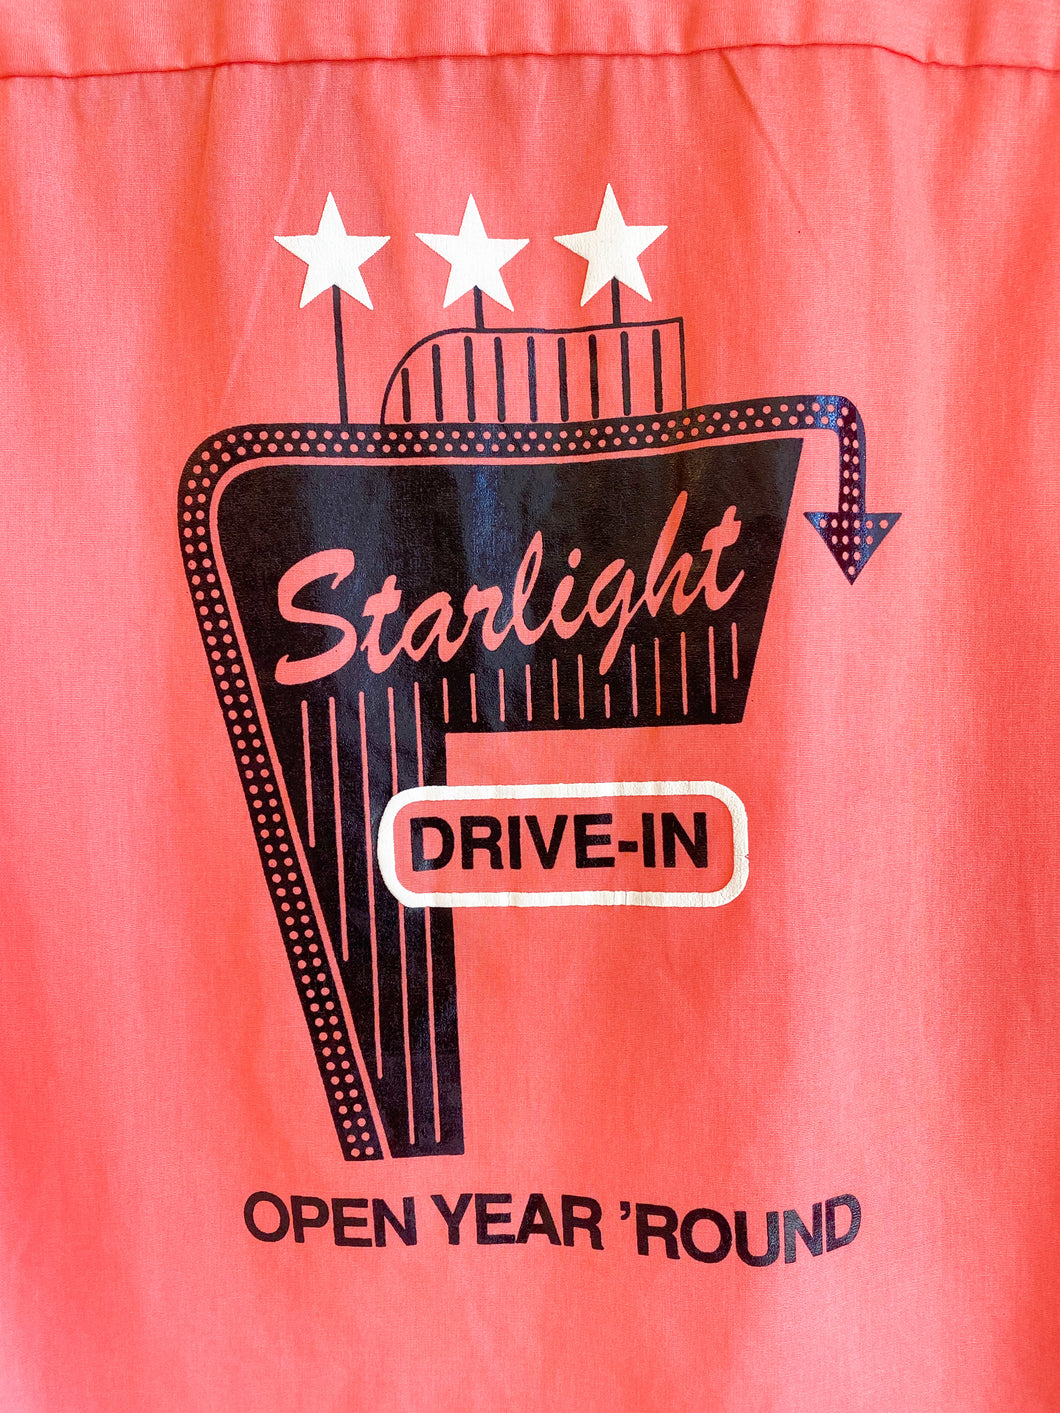 Starlight drive-in bowling shirt